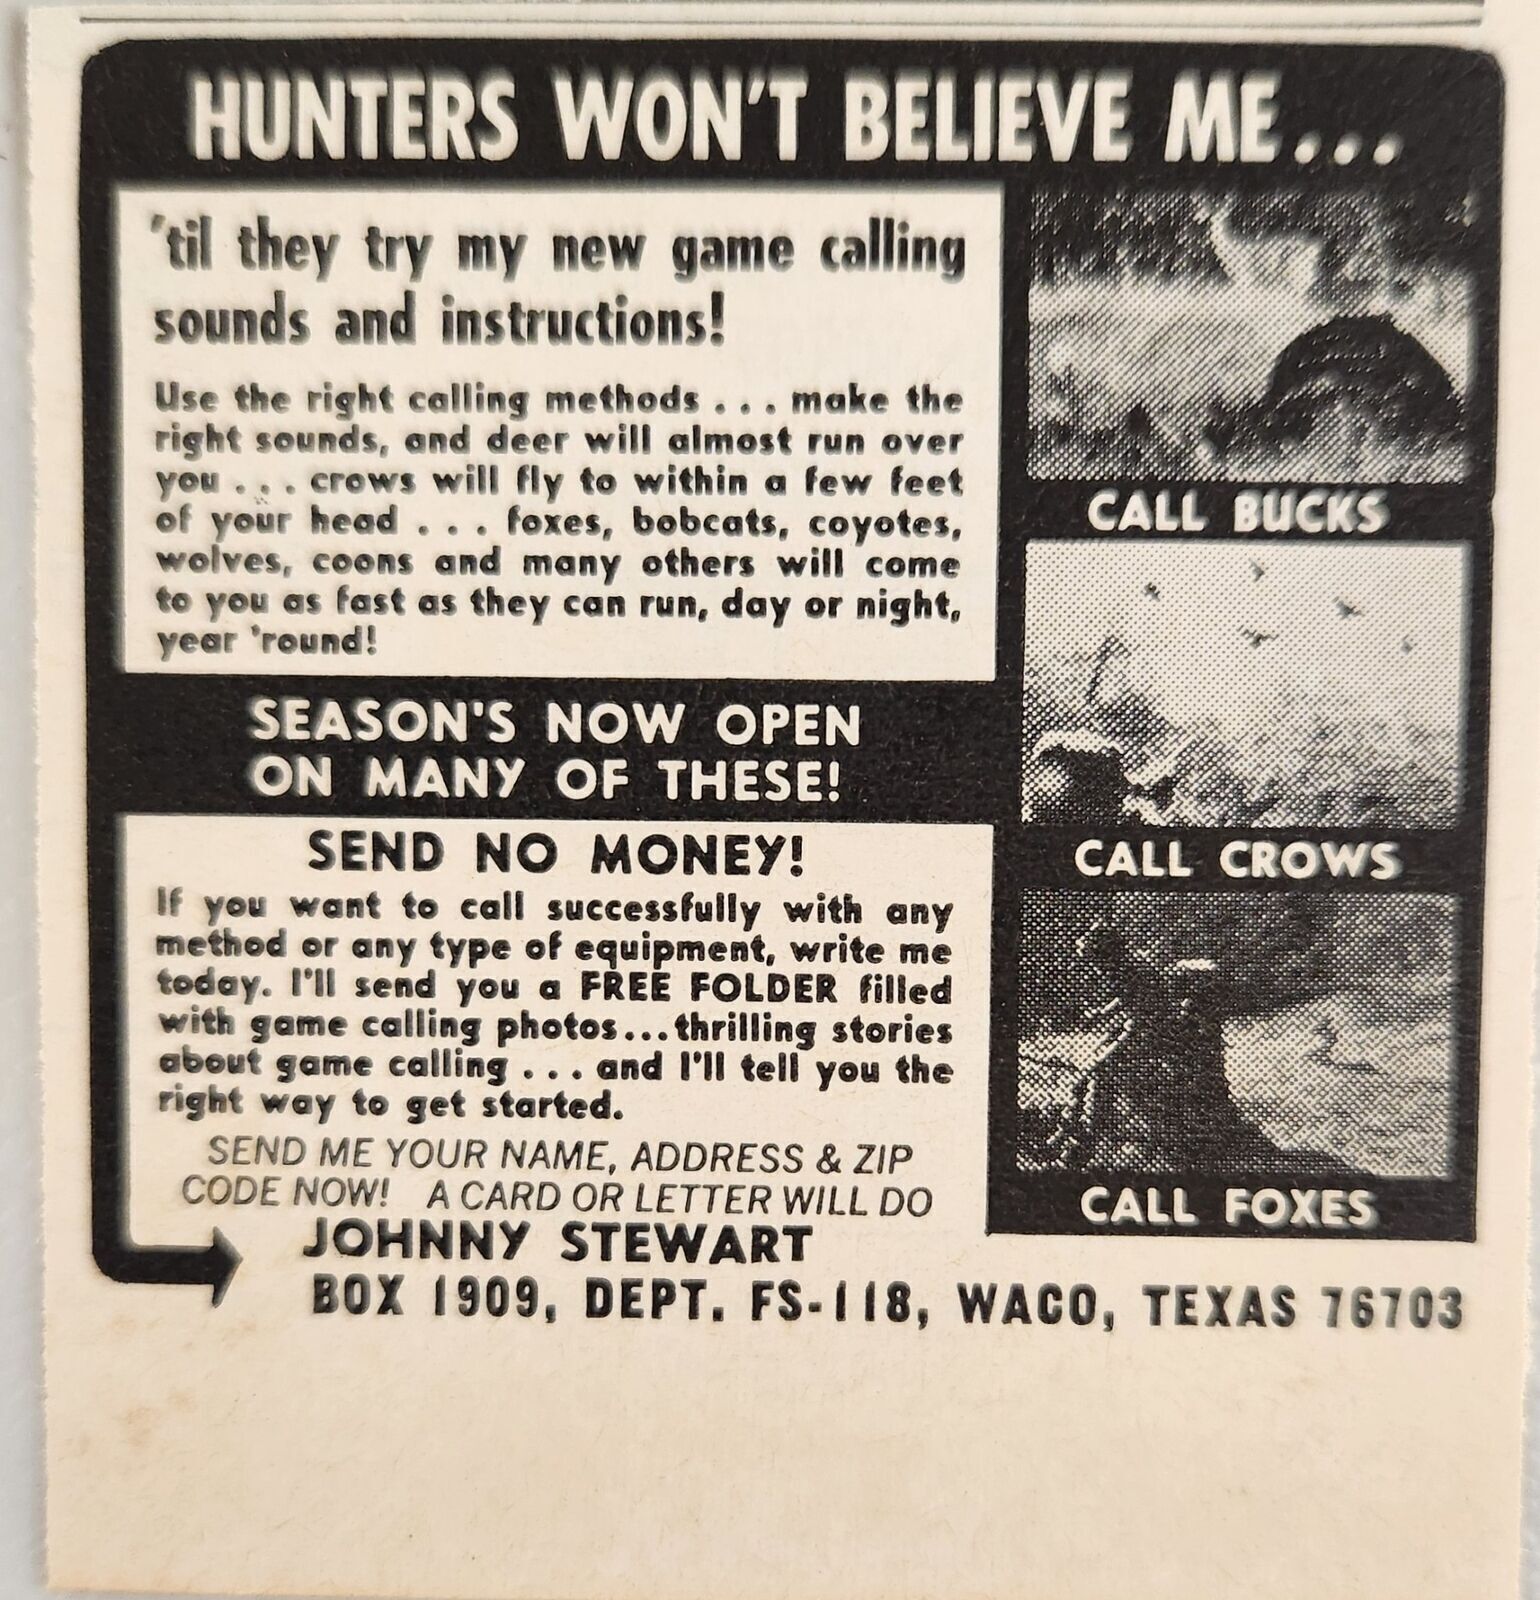 1968 Print Ad Johnny Stewart Hunting Game Calls Bucks,Crows,Foxes Waco,Texas